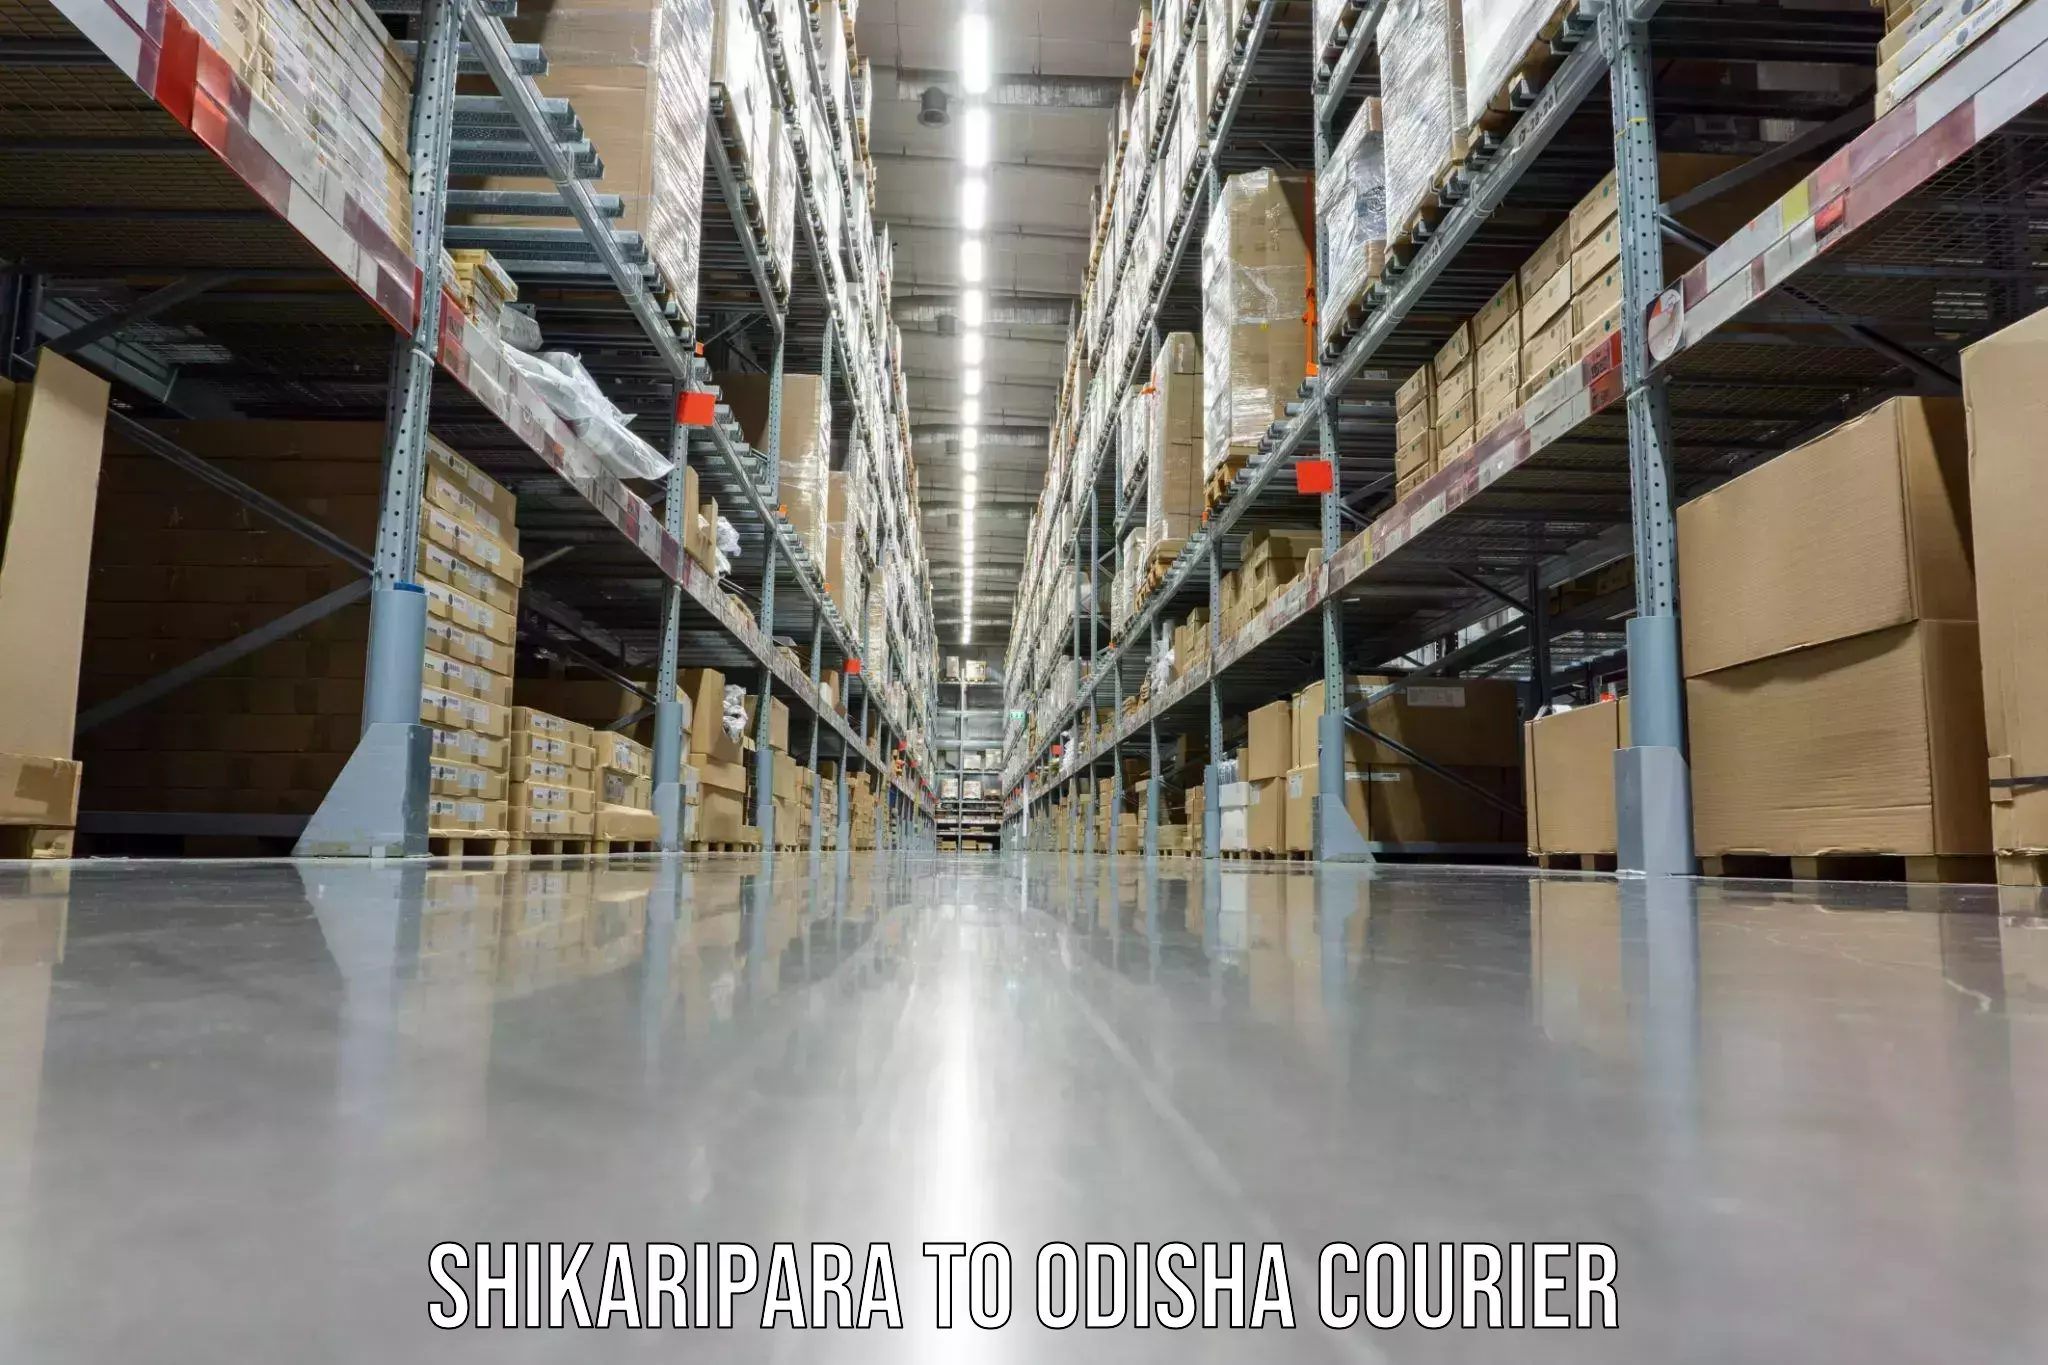 Professional moving company Shikaripara to Bhubaneswar